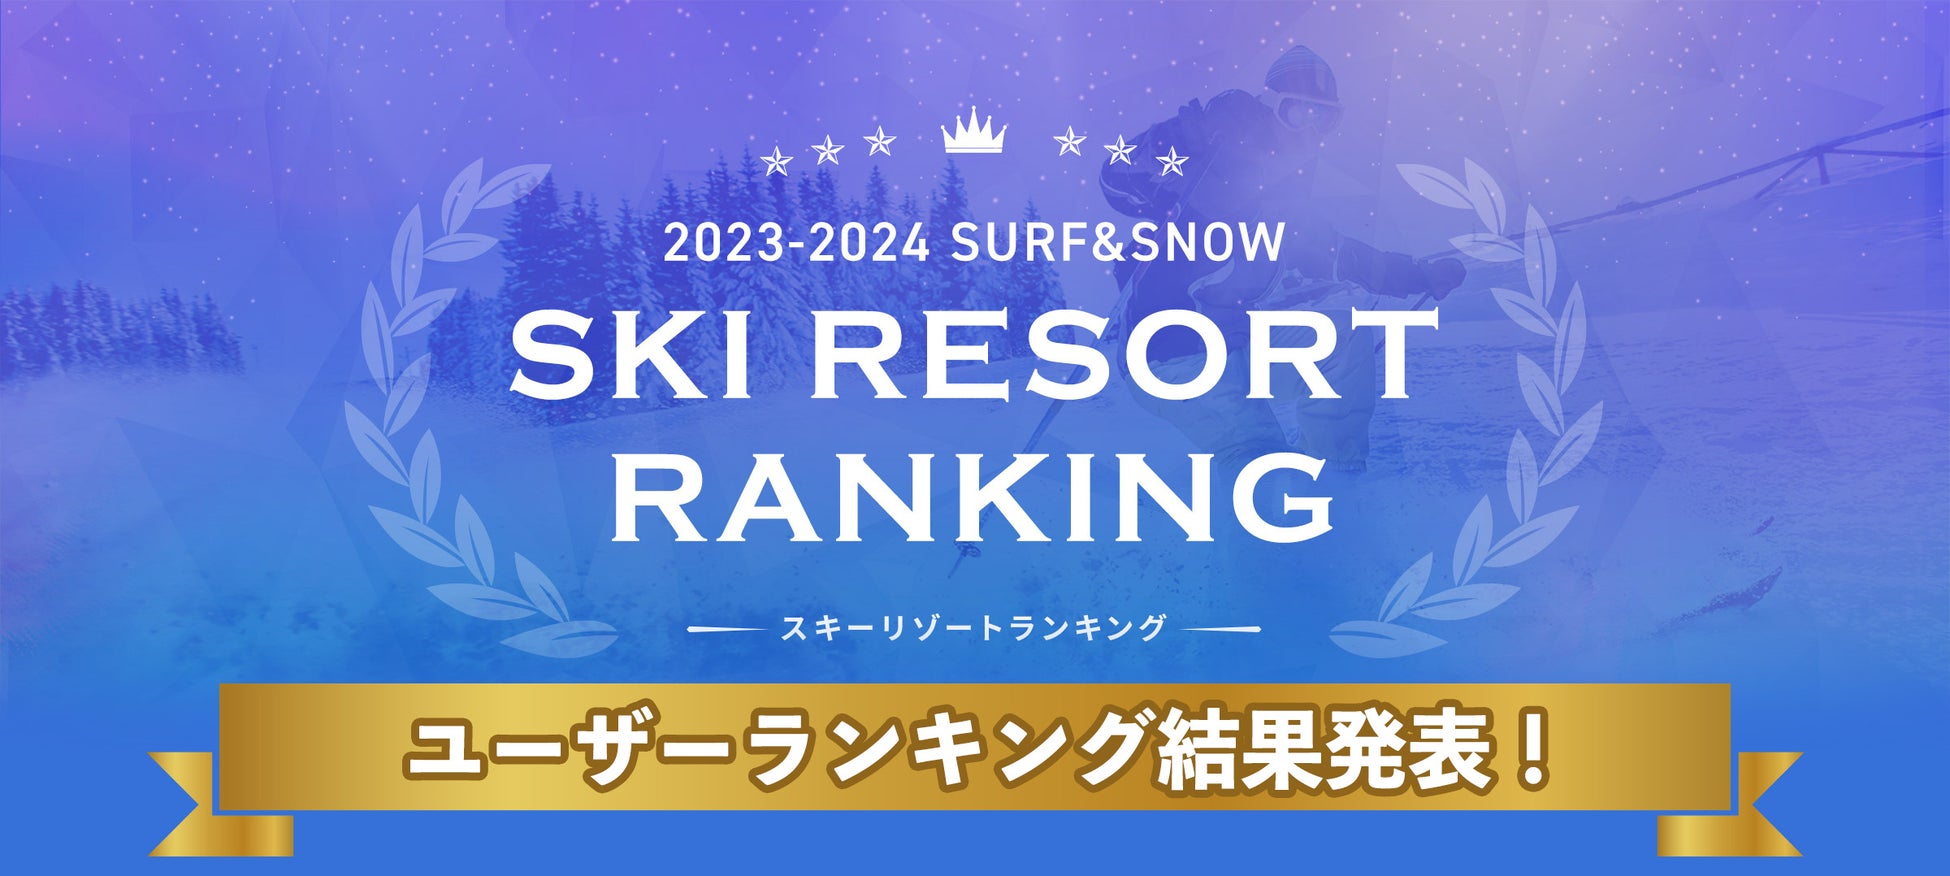 2023-2024 SURF&SNOW SKI RESORT RANKING